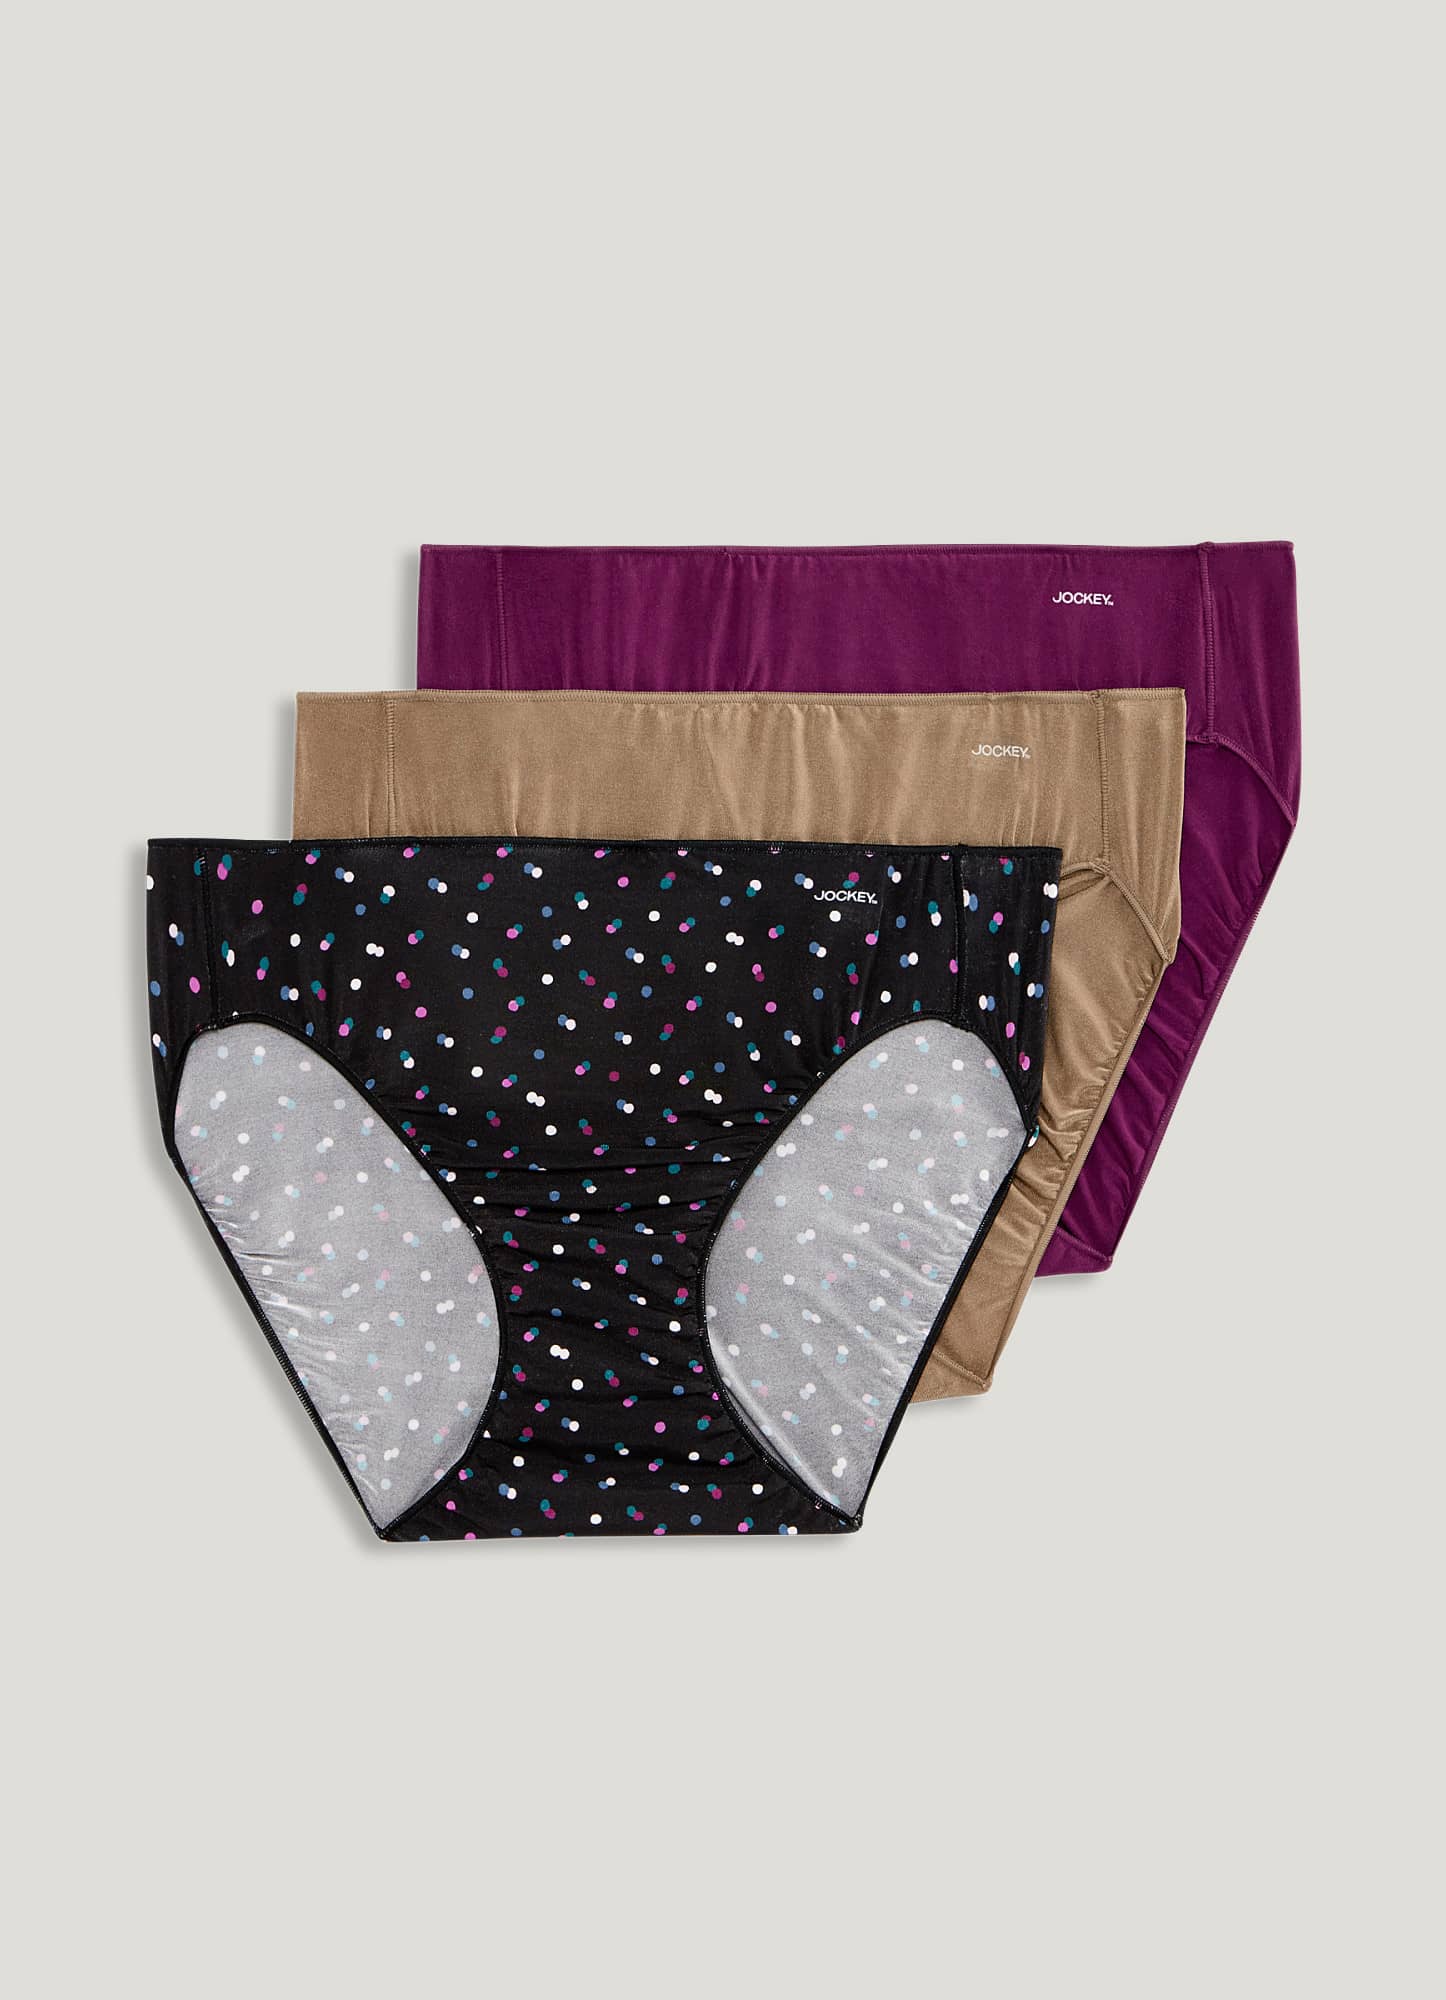 Jockey Women's Underwear No Panty Line Promise Tactel Bikini, Light, 5 at   Women's Clothing store